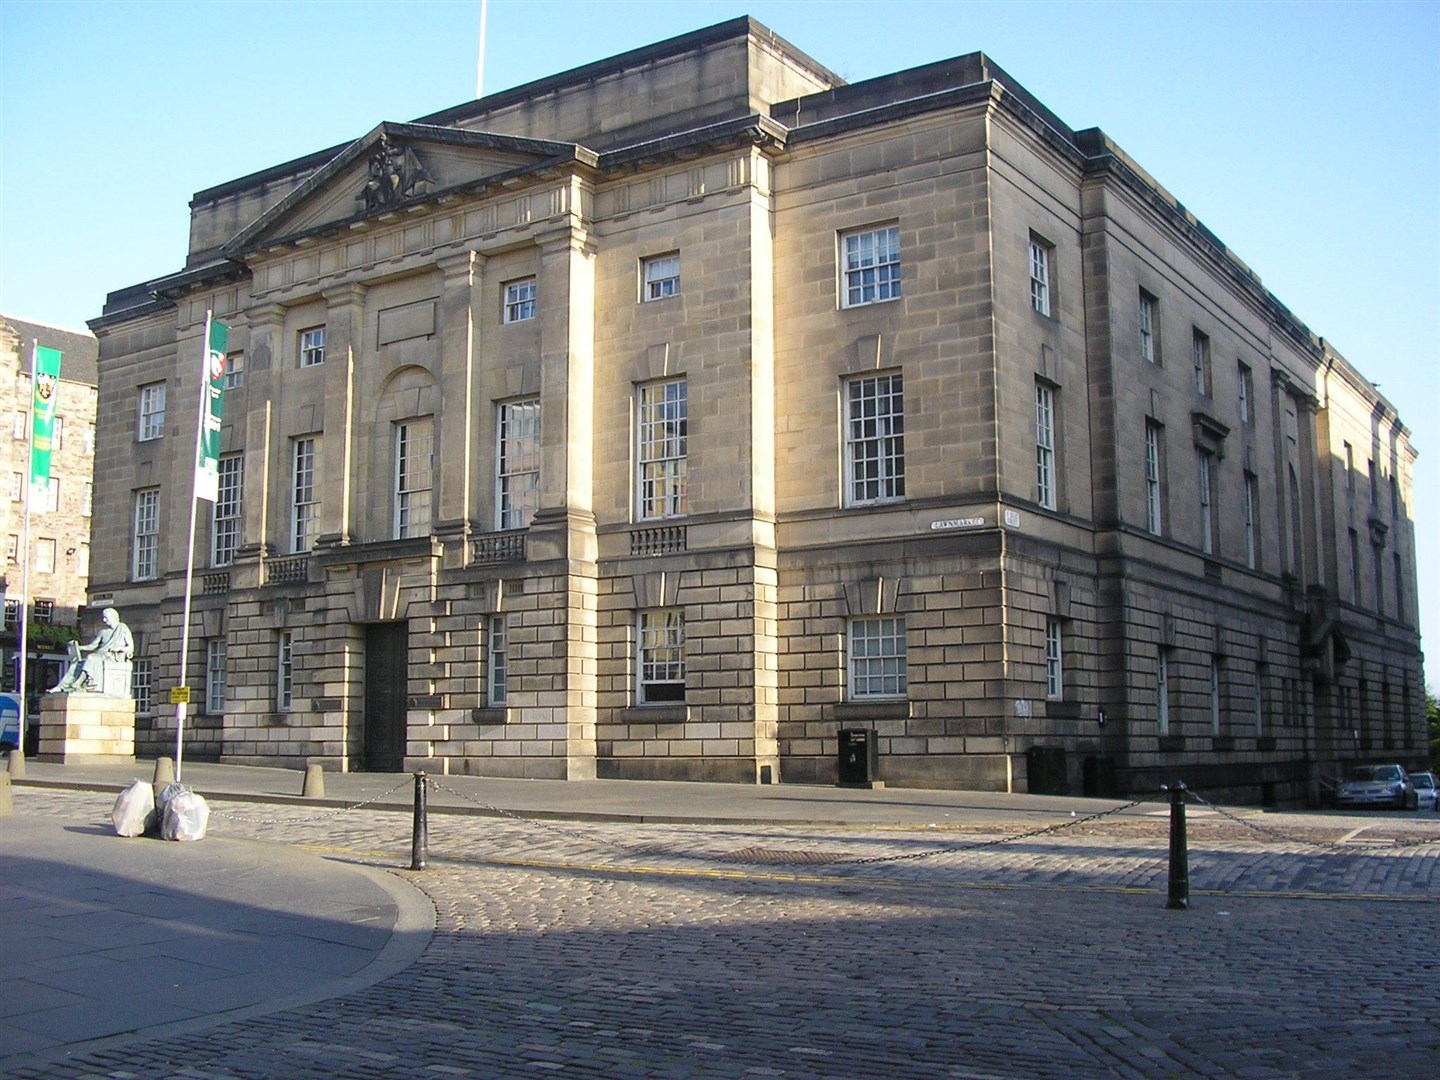 Elgin man Matthew Sinclair was sentenced at the High Court in Edinburgh.